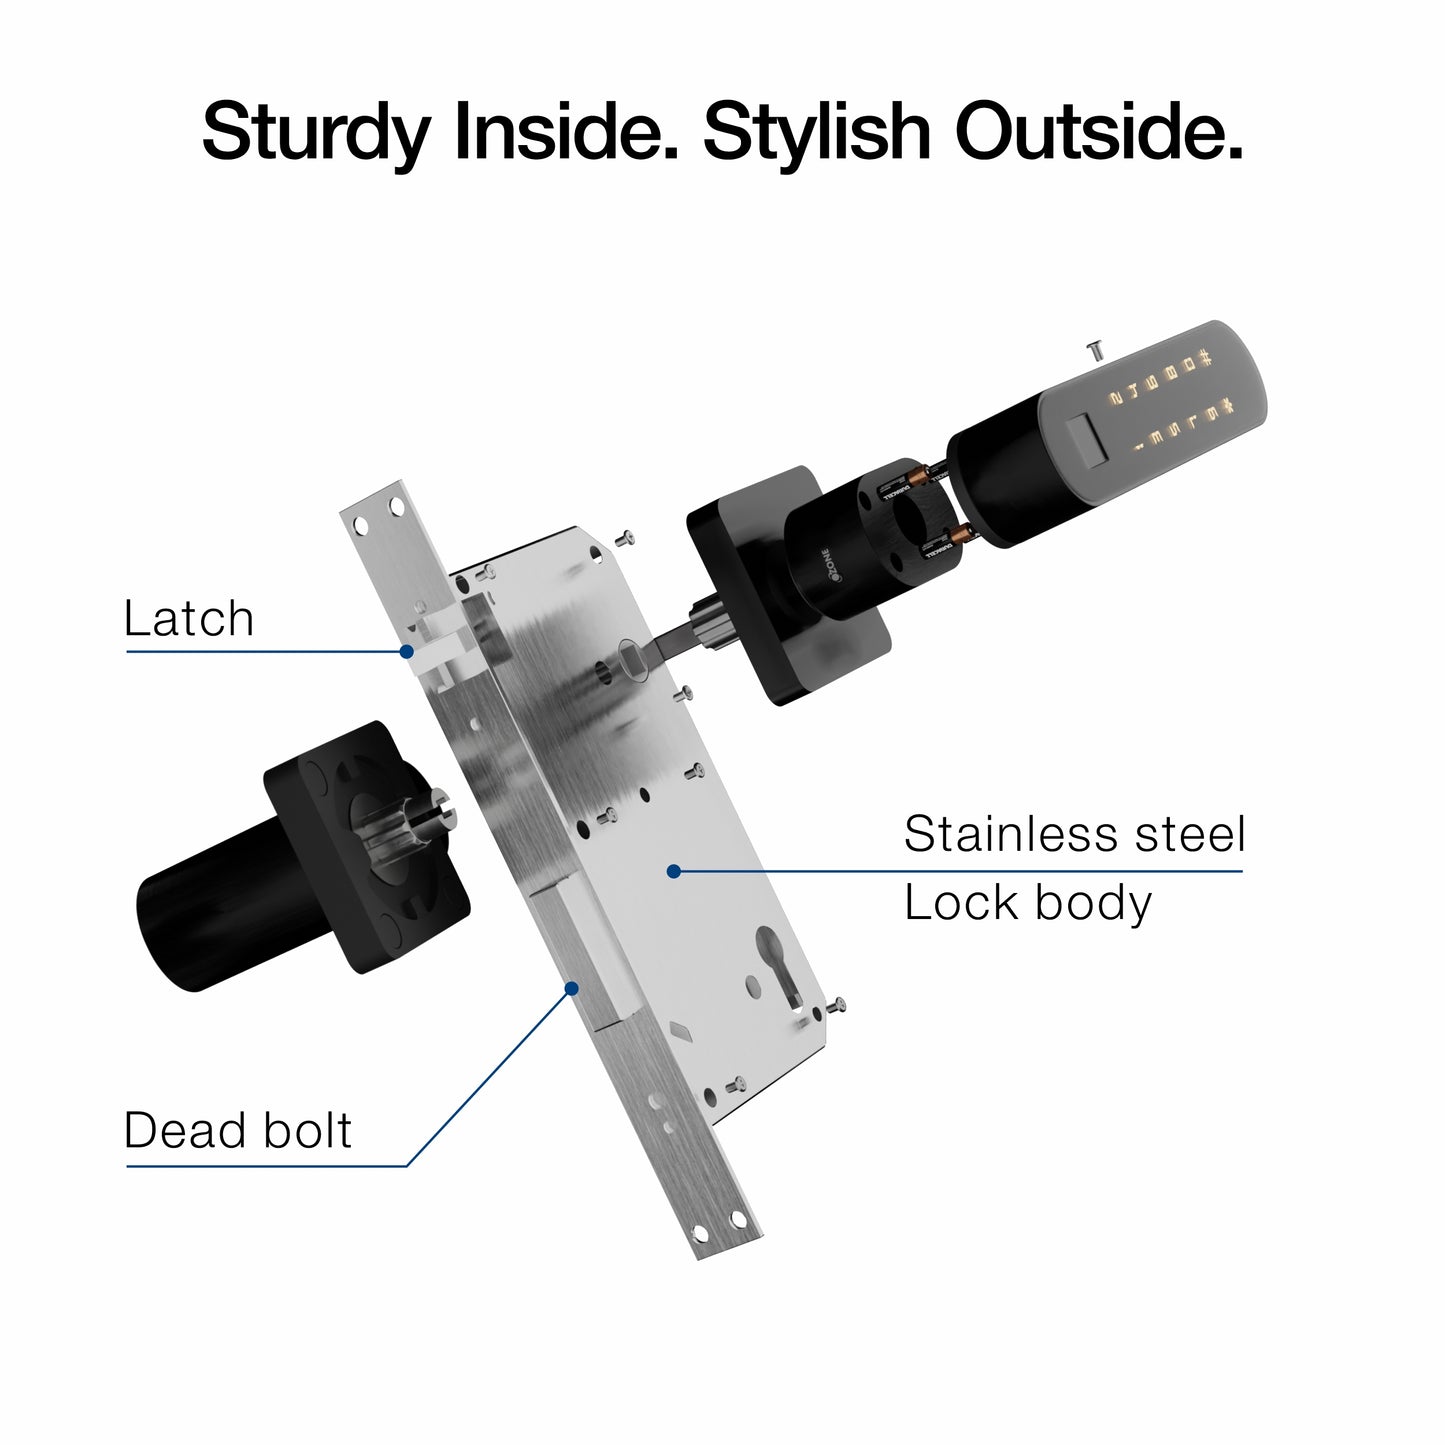 Trinity-R Smart Lock with 4-way Unlock for Internal Doors | Free Installation | Door Thickness: 35-65 mm